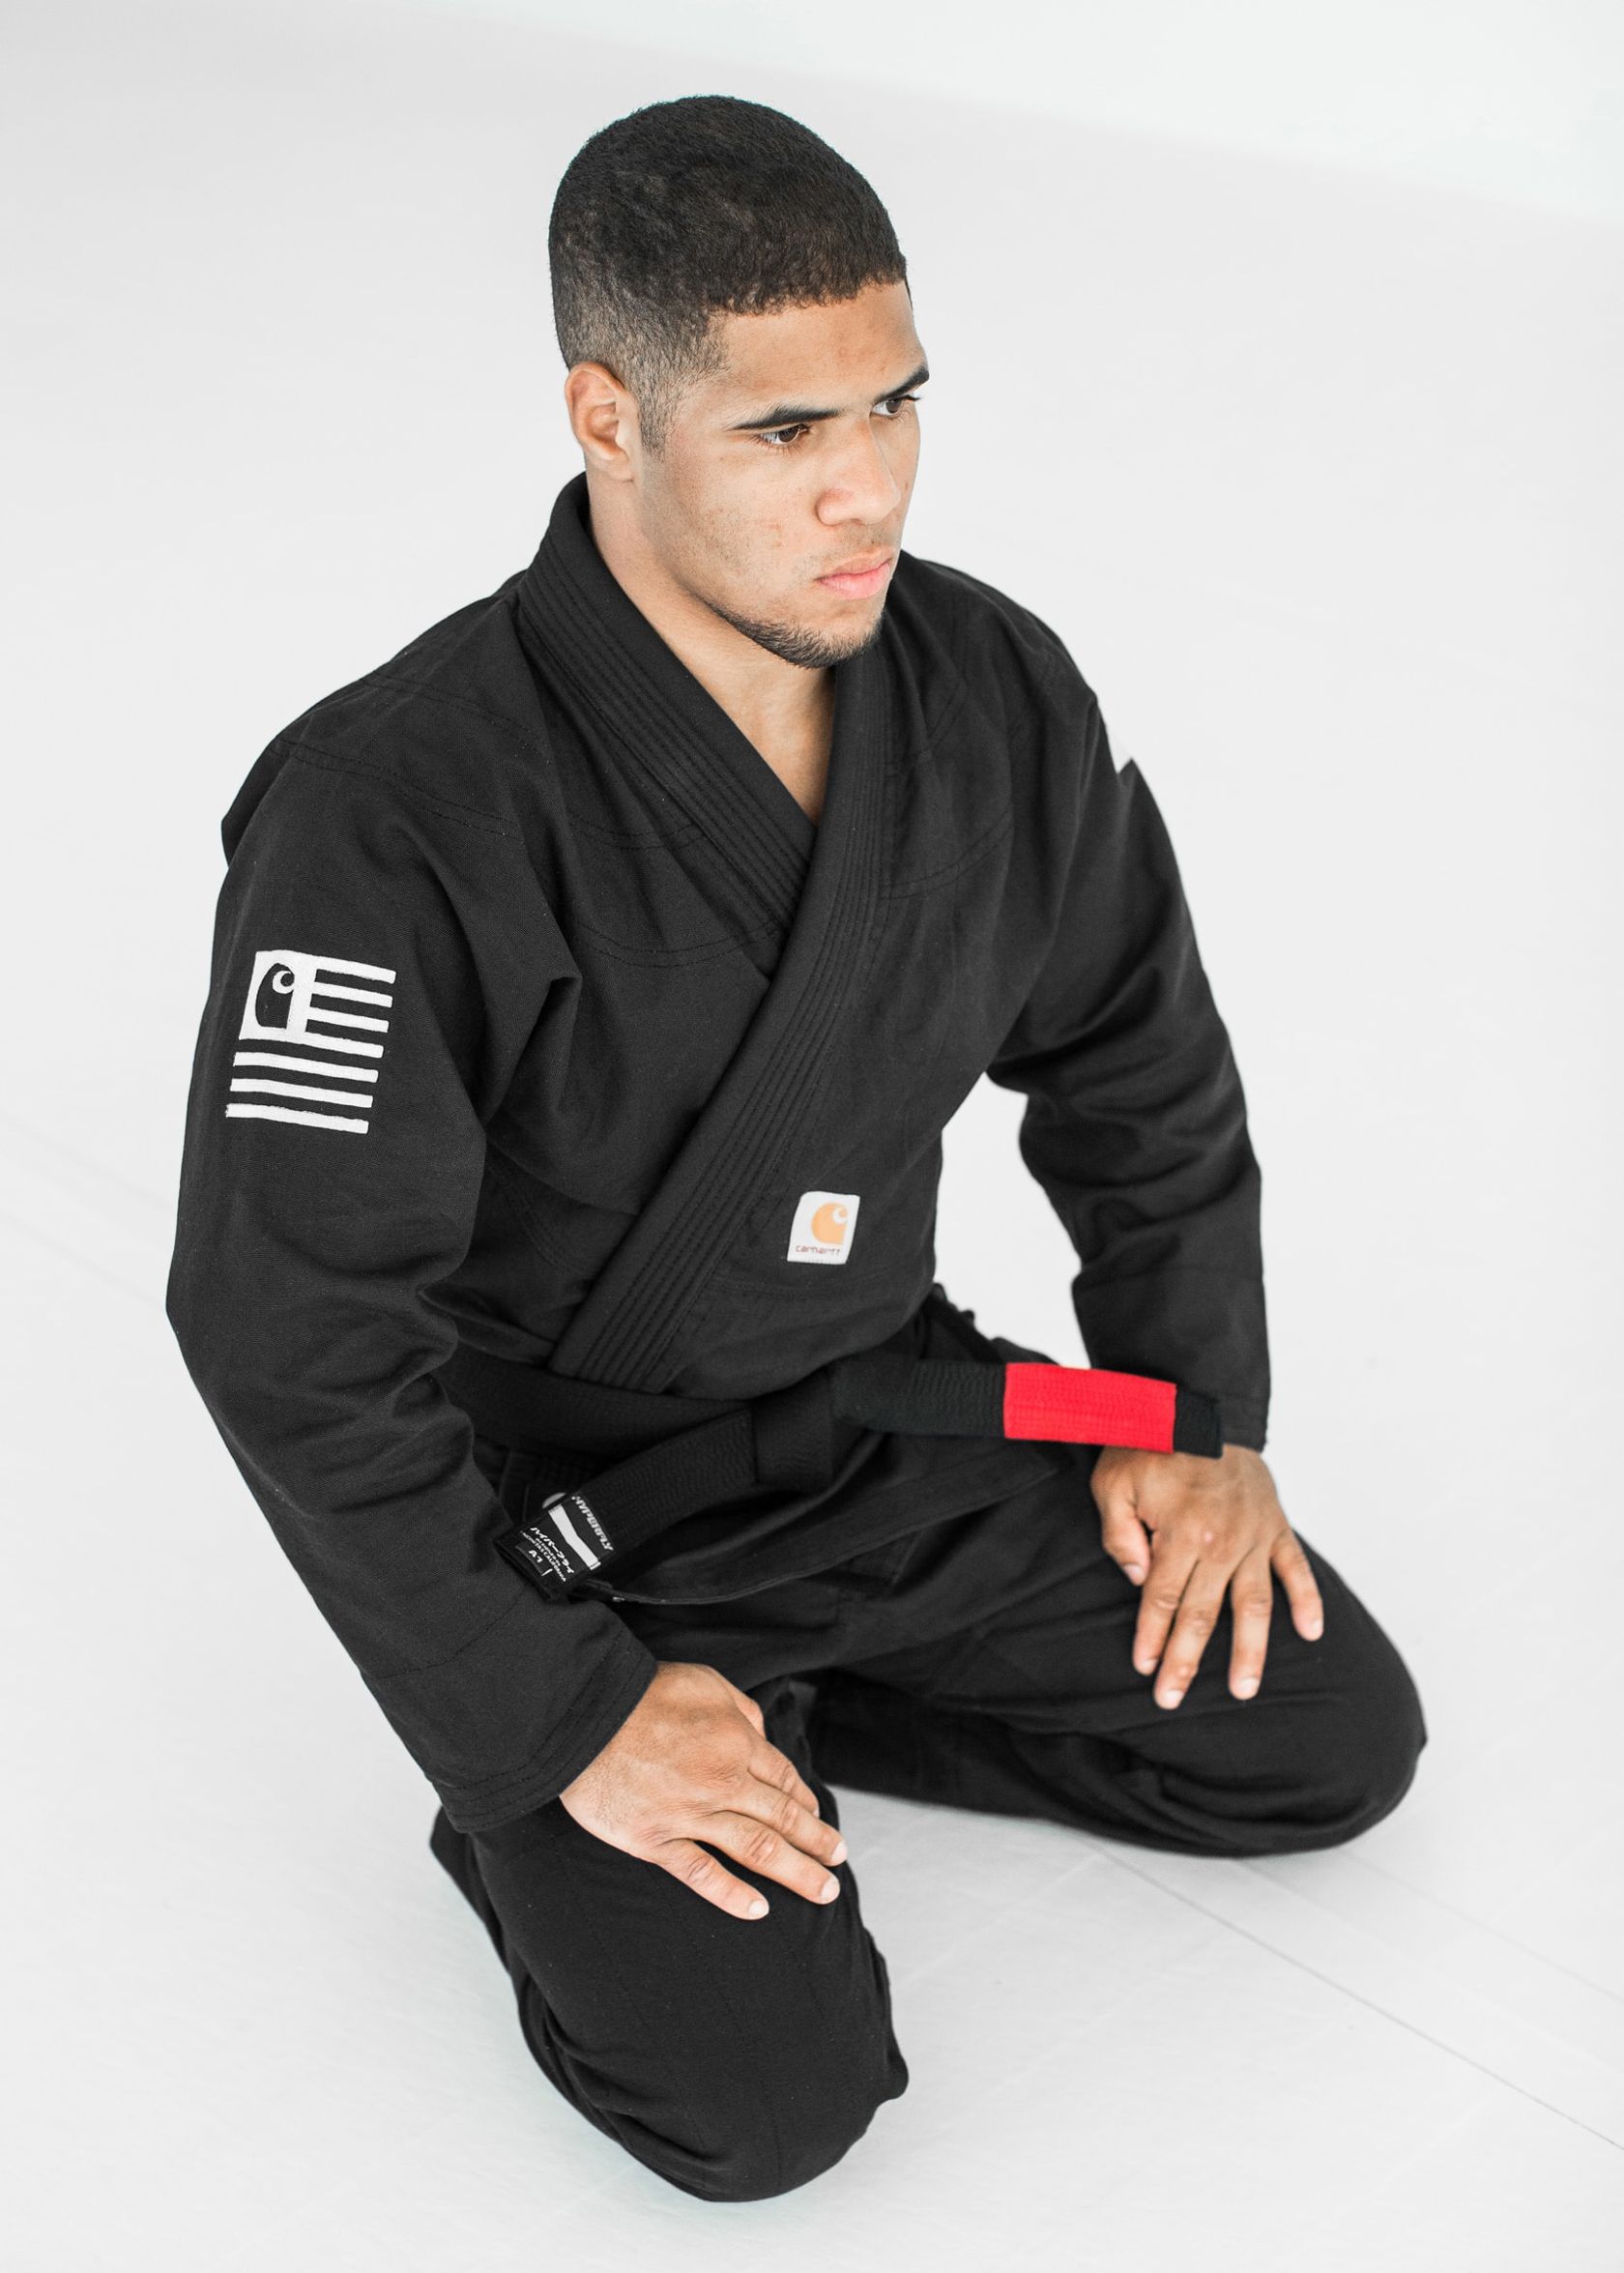 converse kimono judo